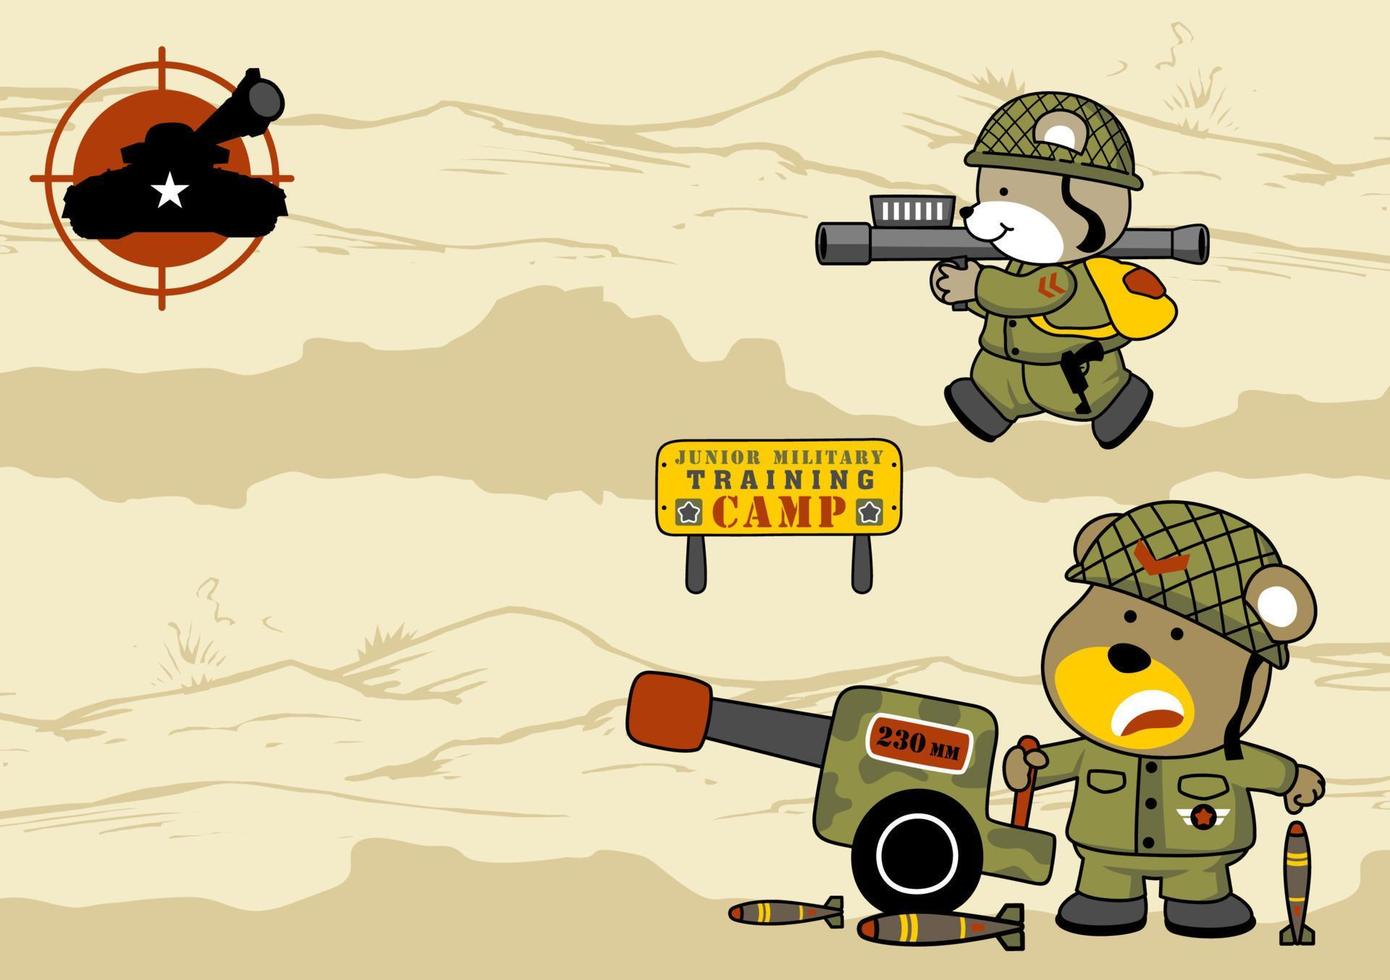 Funny animals soldier with gun in battlefield, vector cartoon illustration